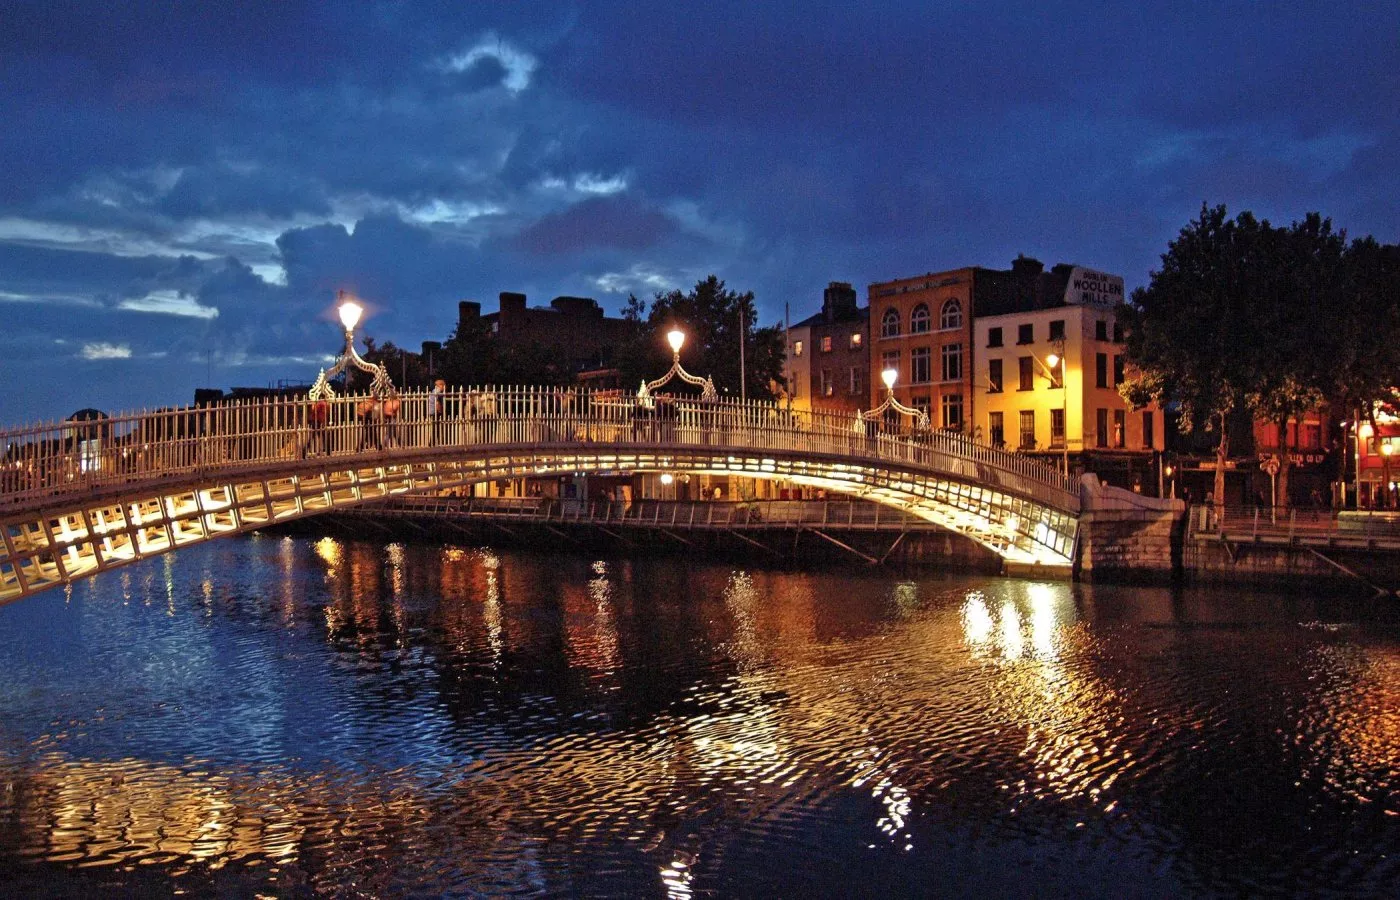 Halfpenny Bridge in Ireland, Europe | Architecture - Rated 3.7